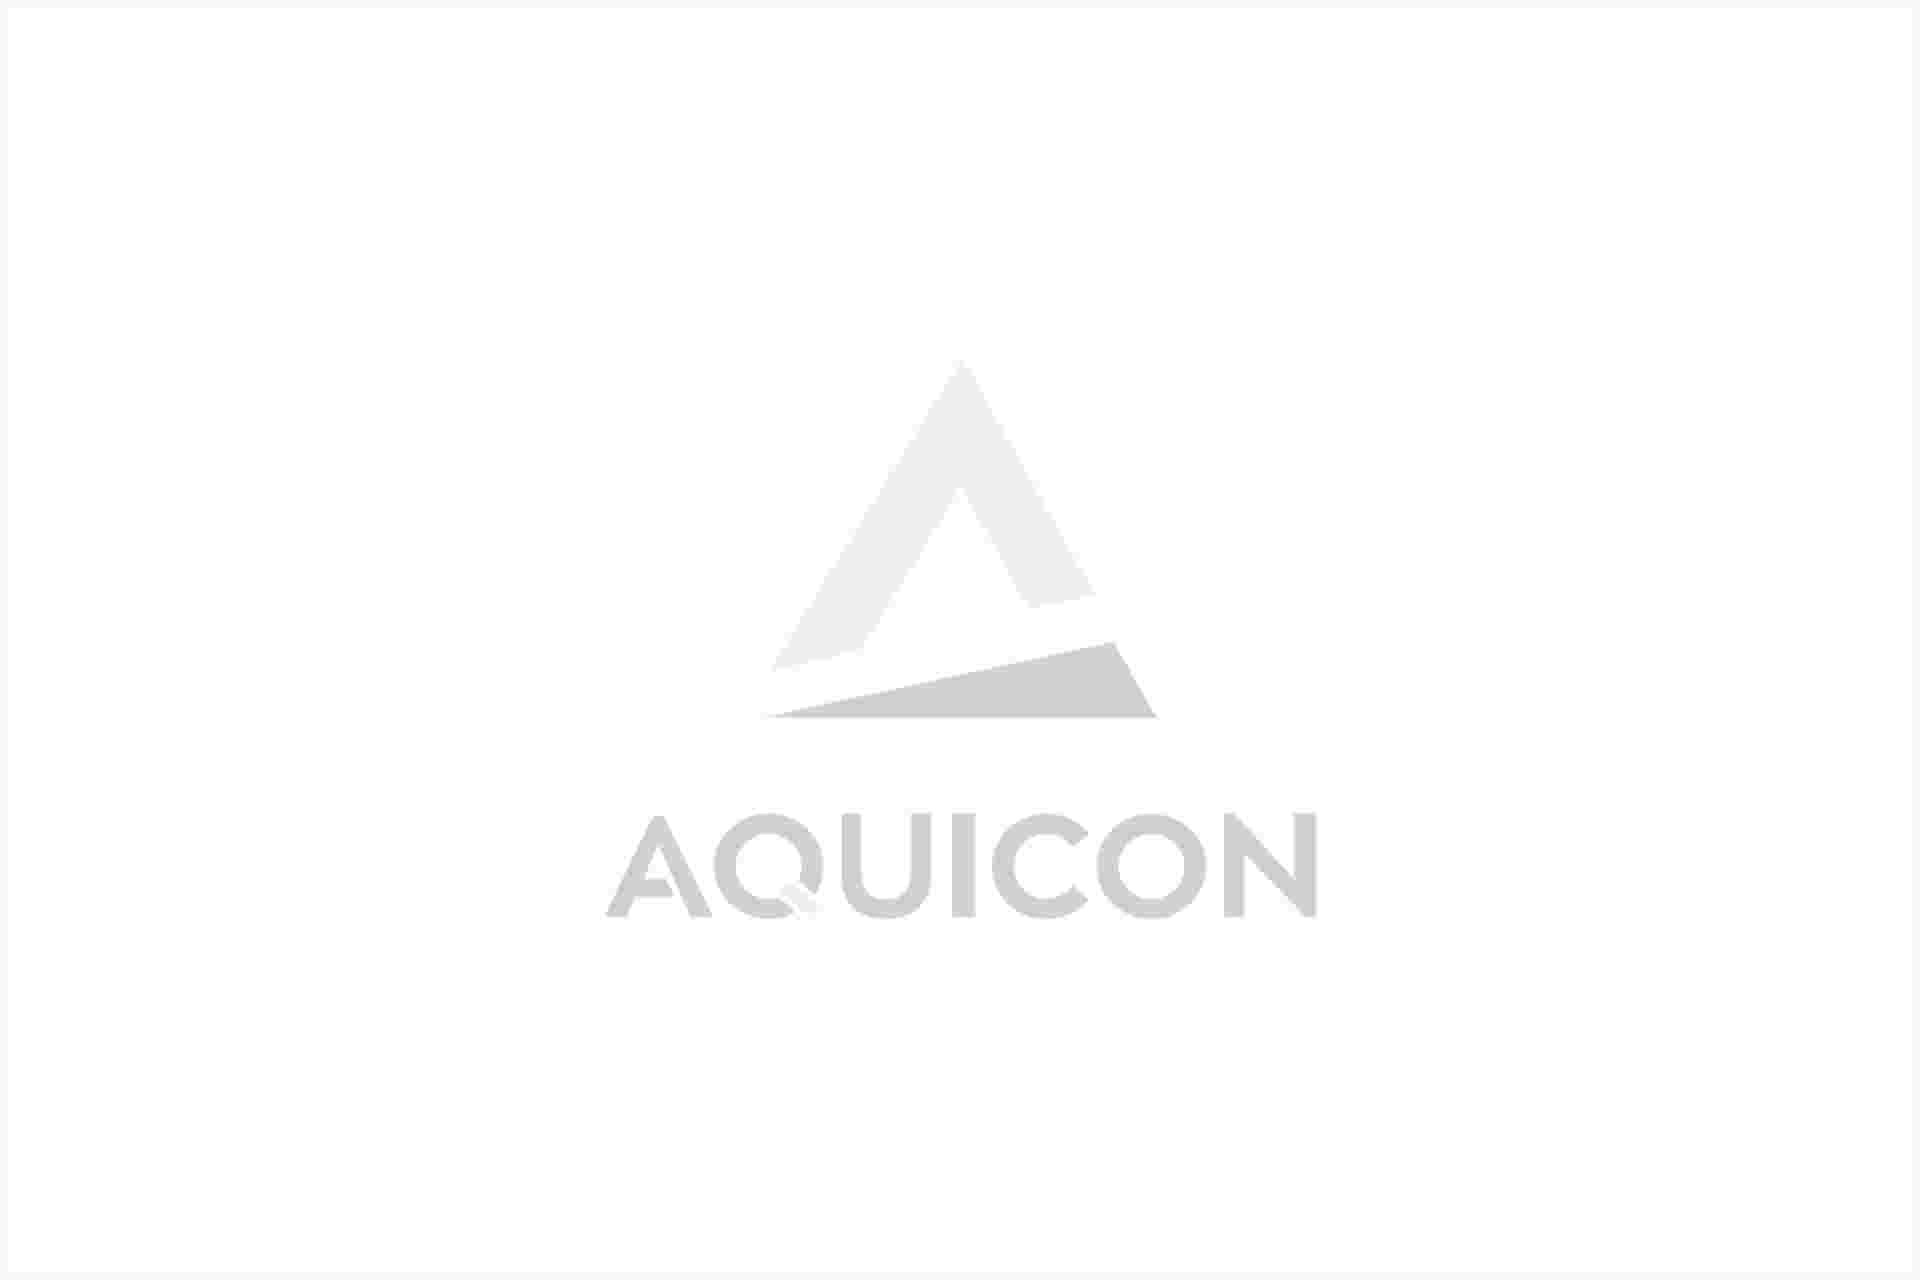 Aquicon Construction - Aquicon-Logo2